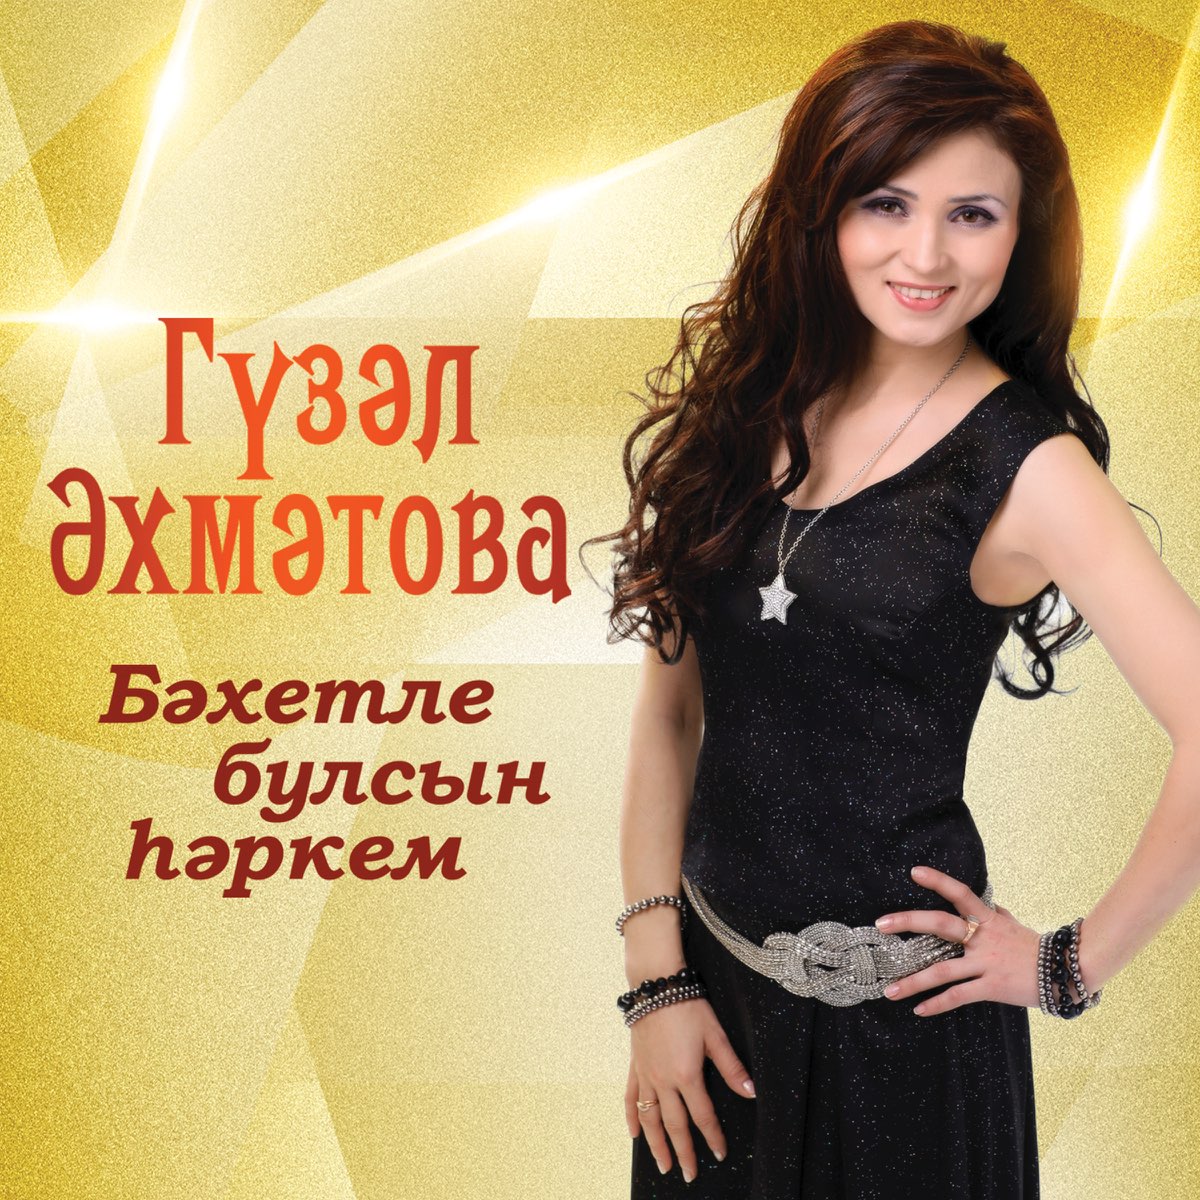 Бесплатная татарская музыка mp3